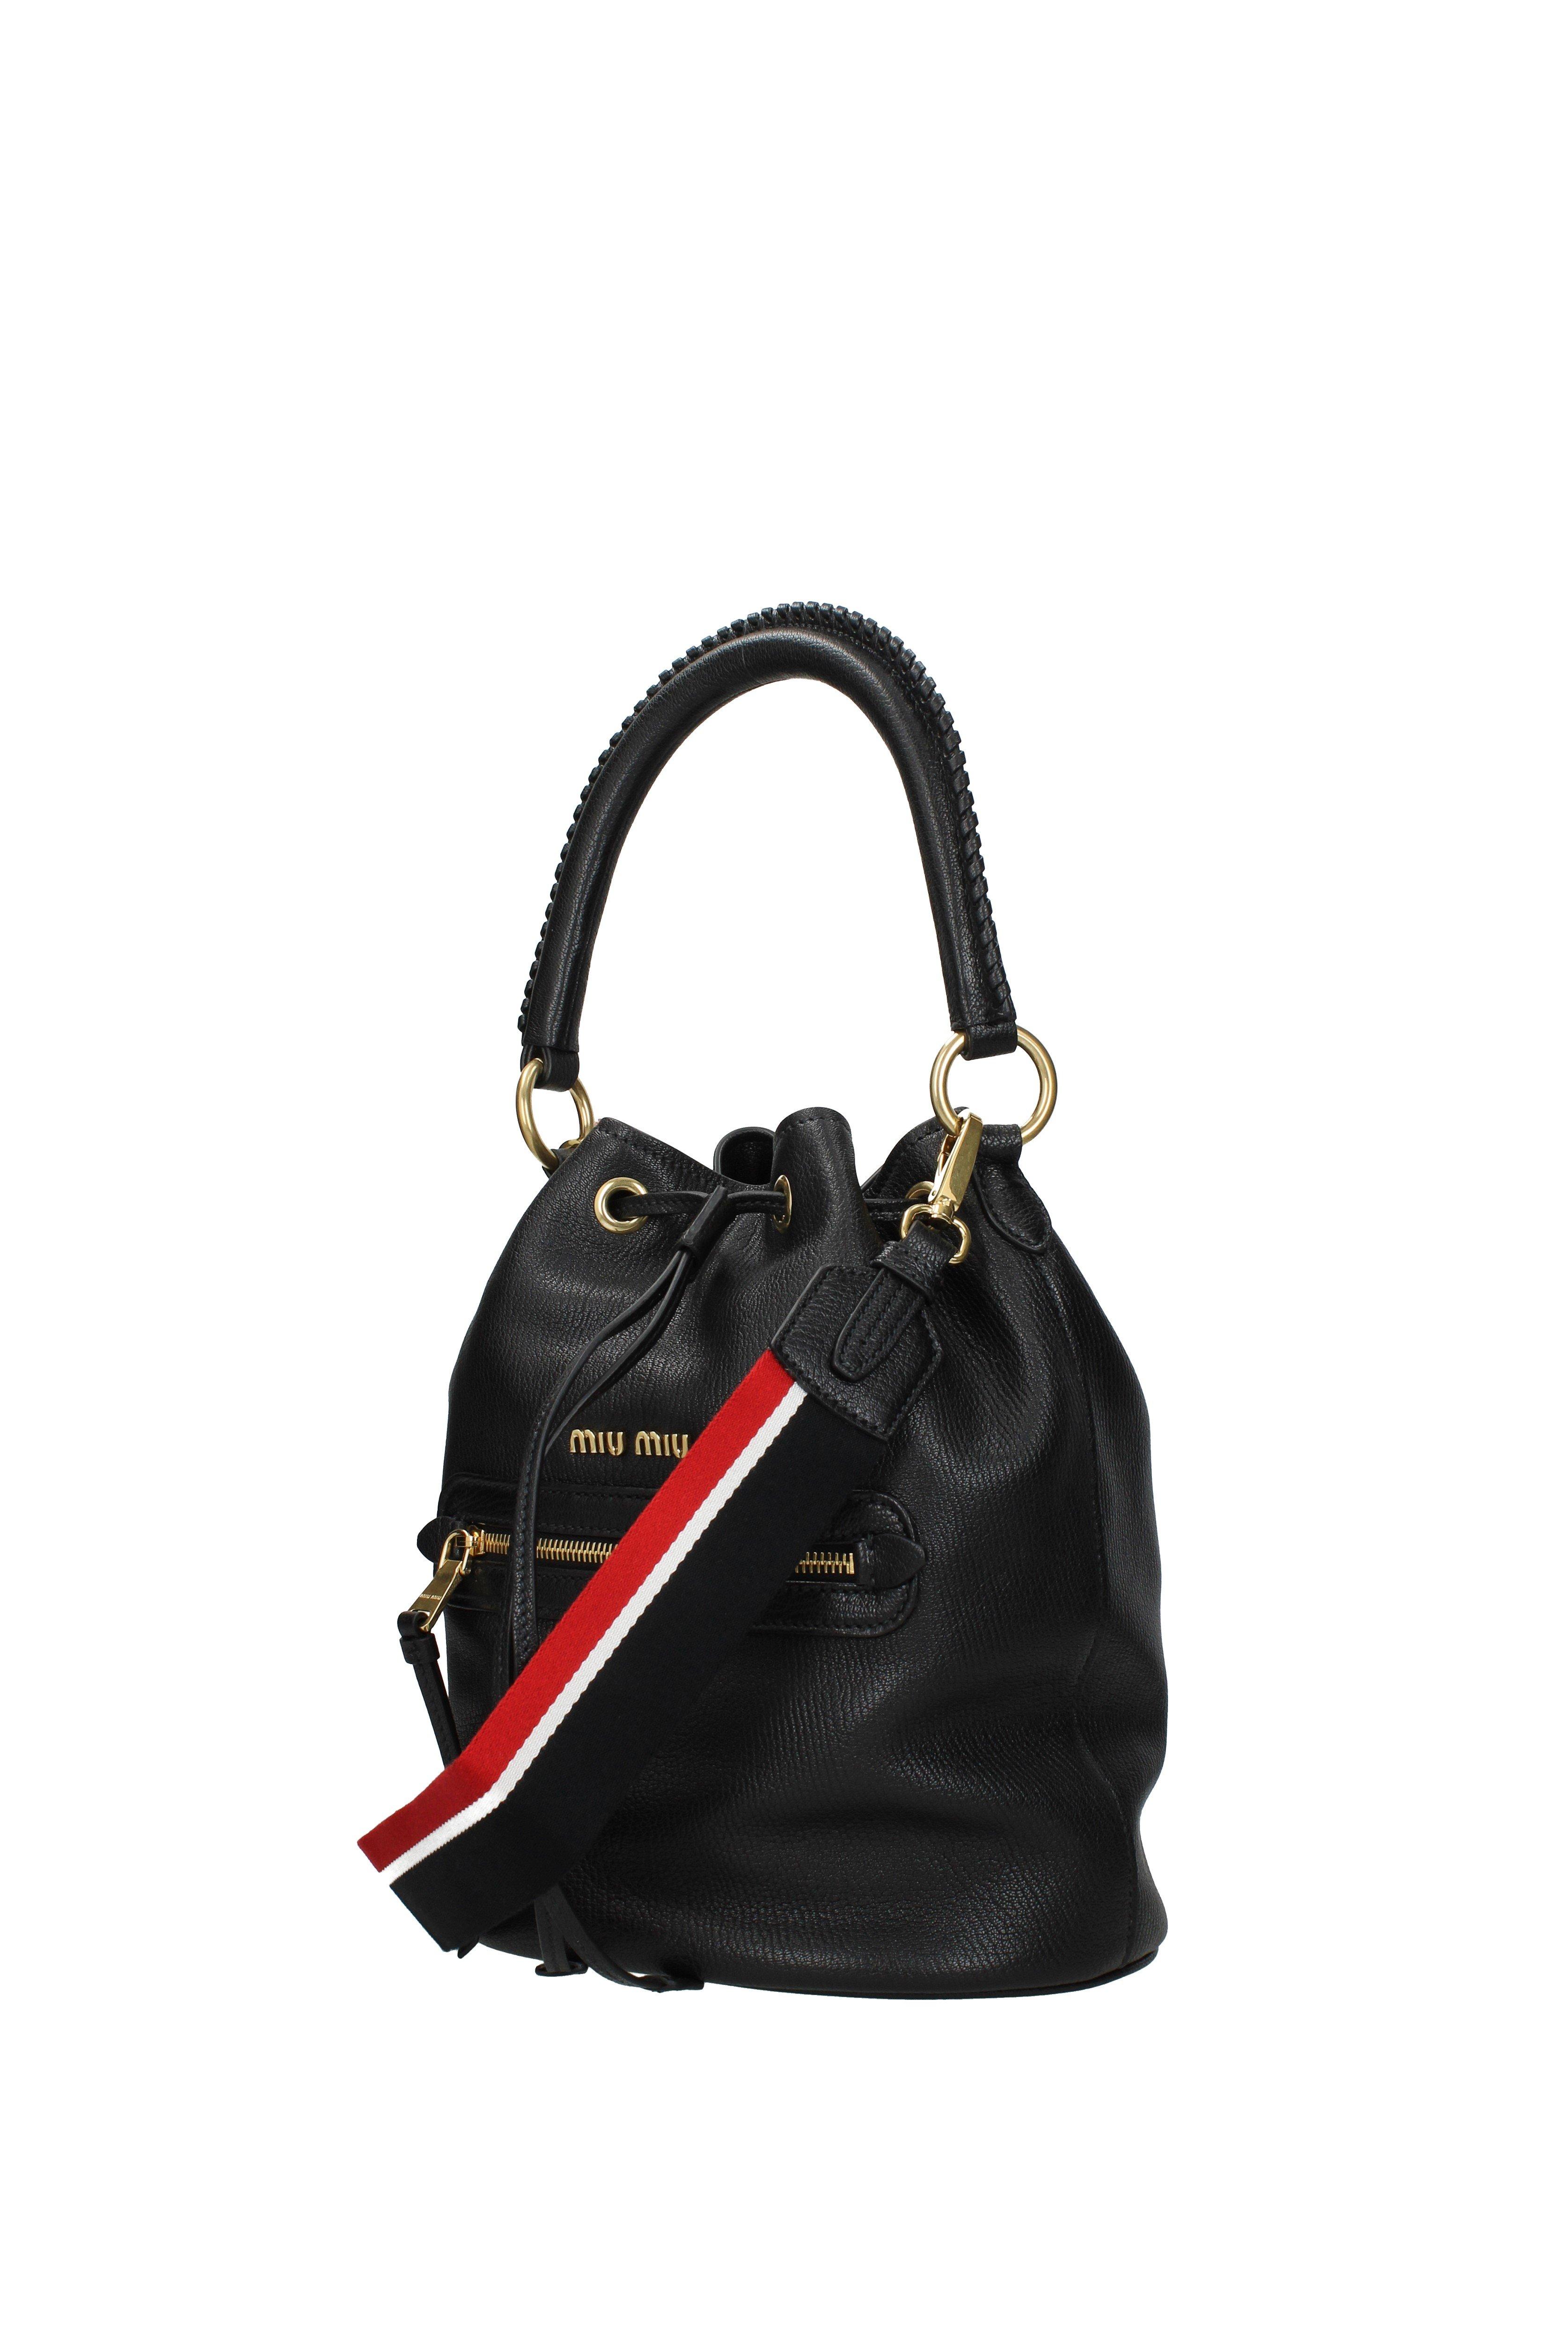 Miu Miu Black Handbags - Lyst